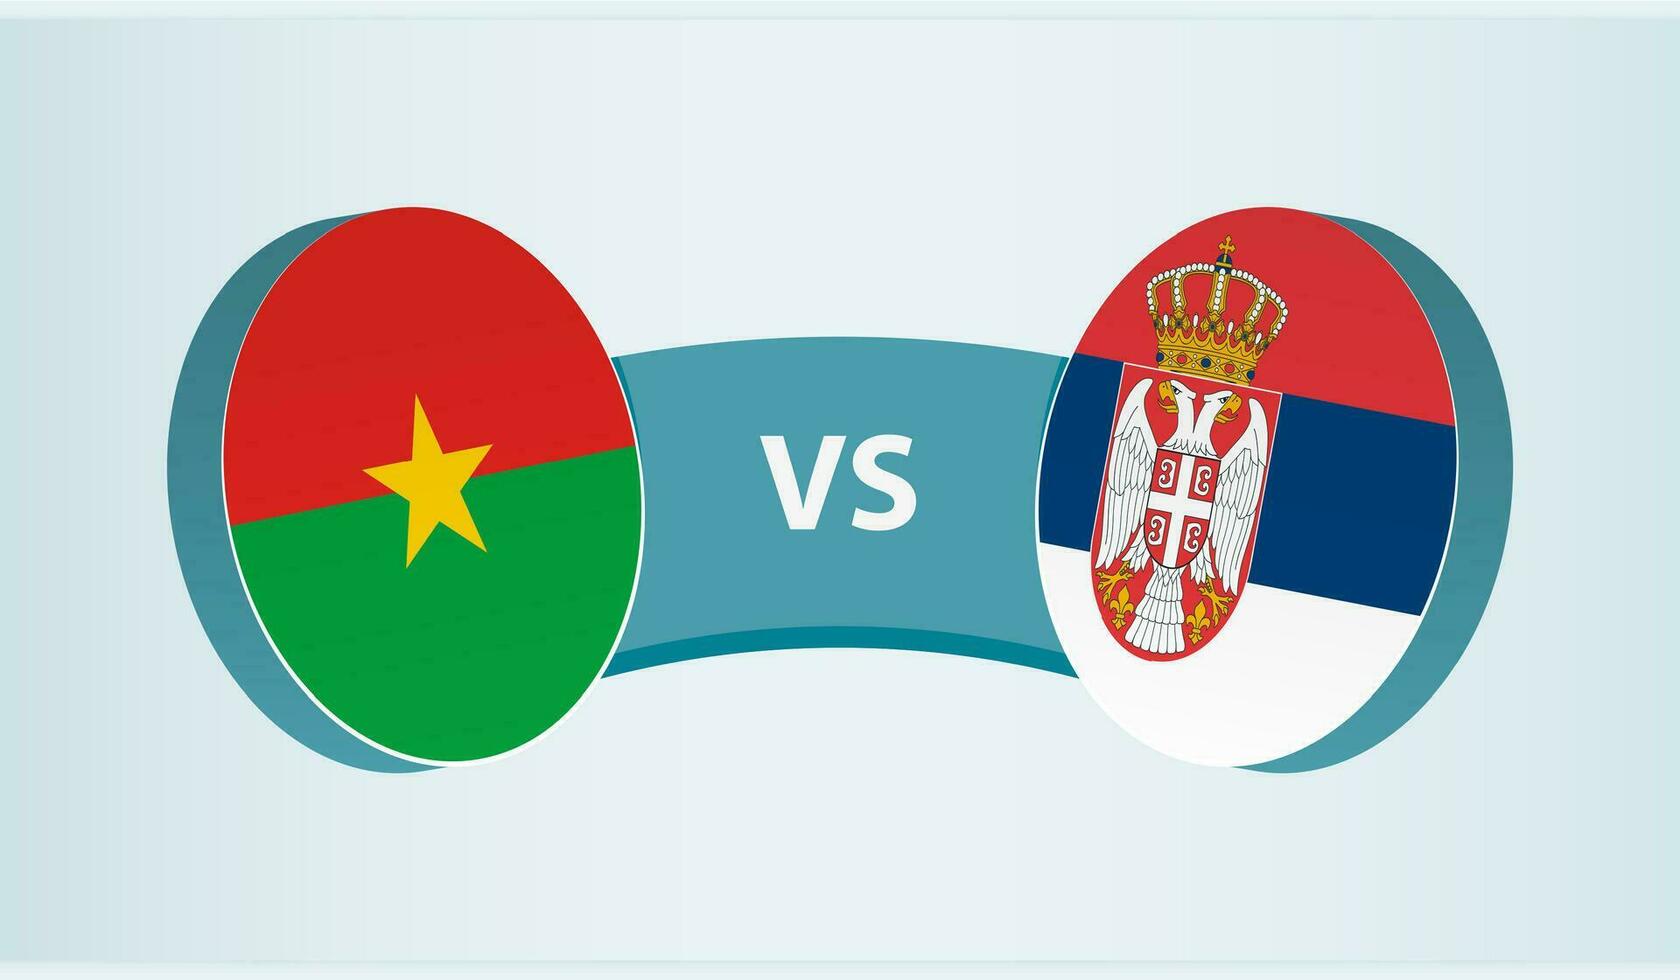 Burkina Faso versus Serbia, team sports competition concept. vector